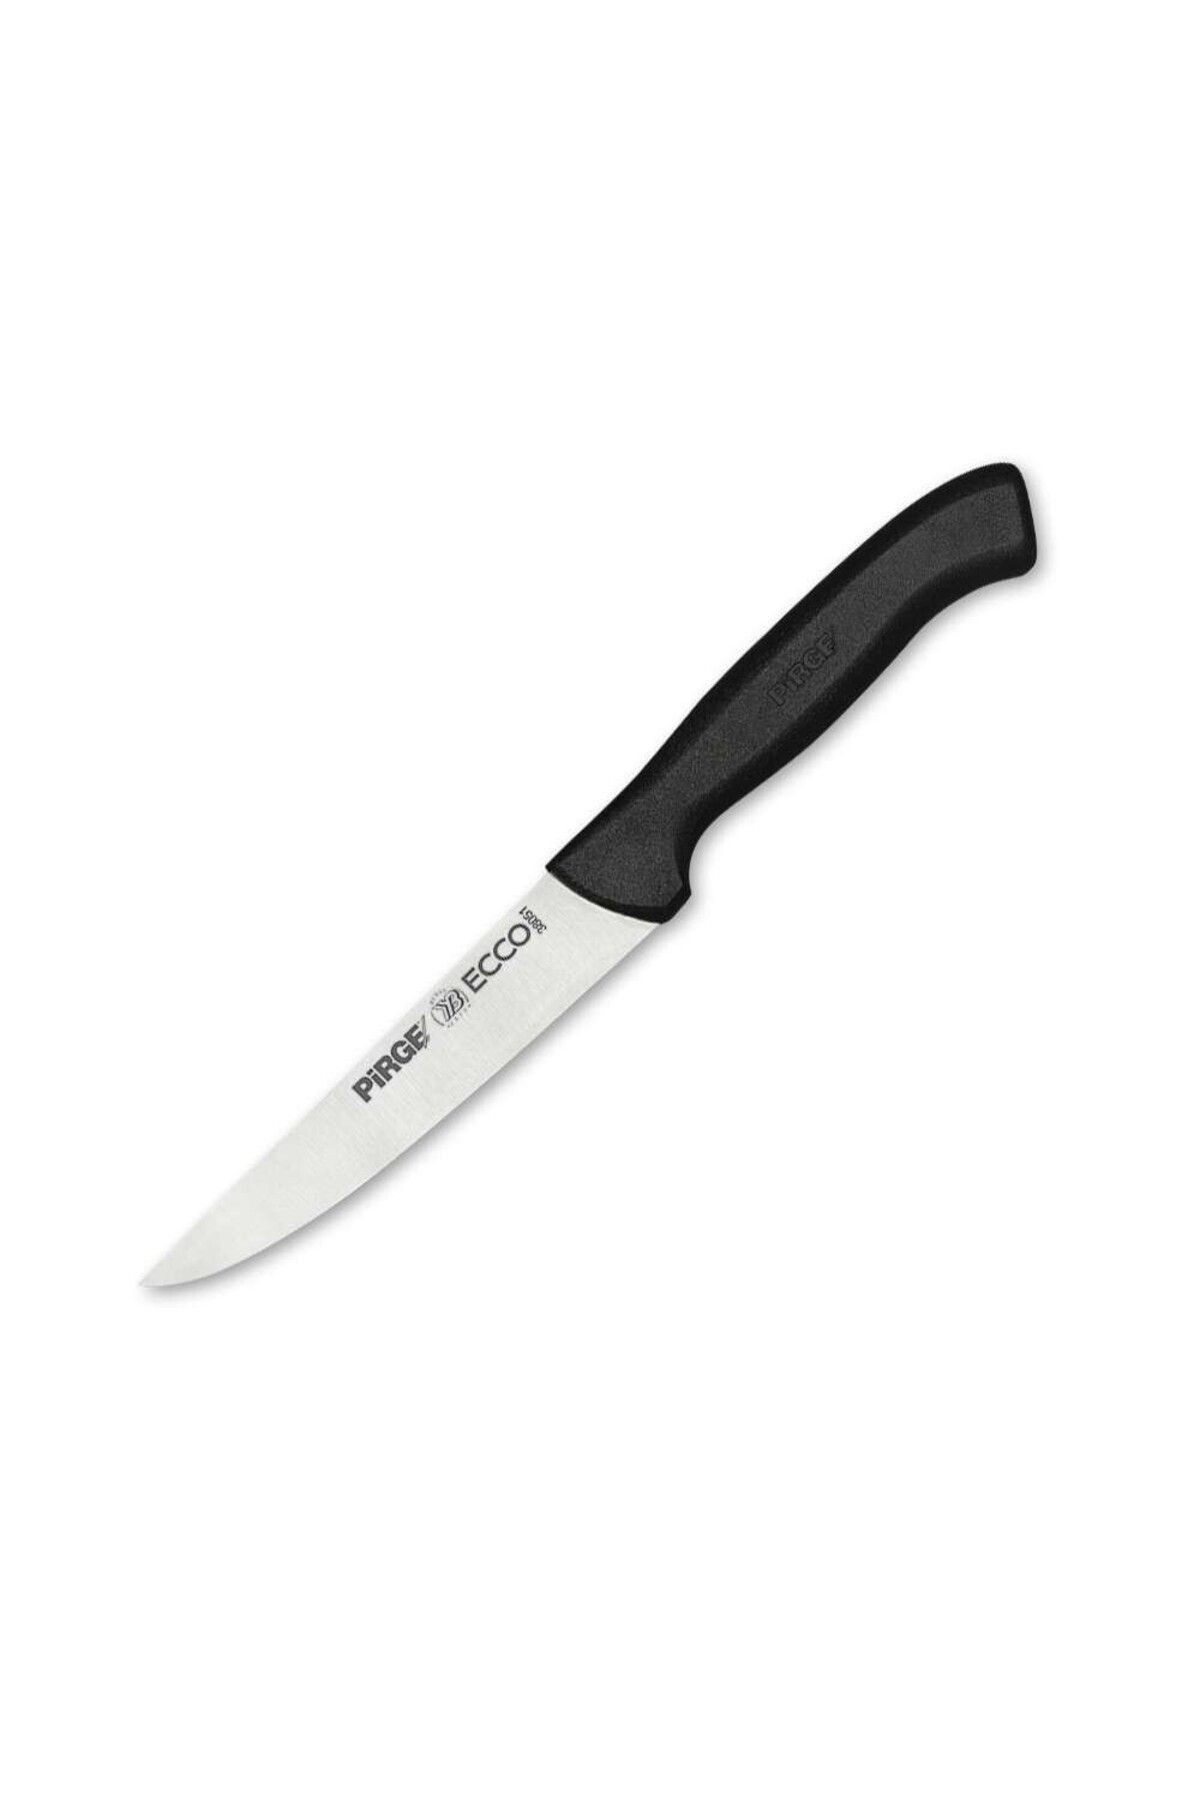 Pirge Pirge Ecco Mutfak Bıçağı 12.5 Cm 38051